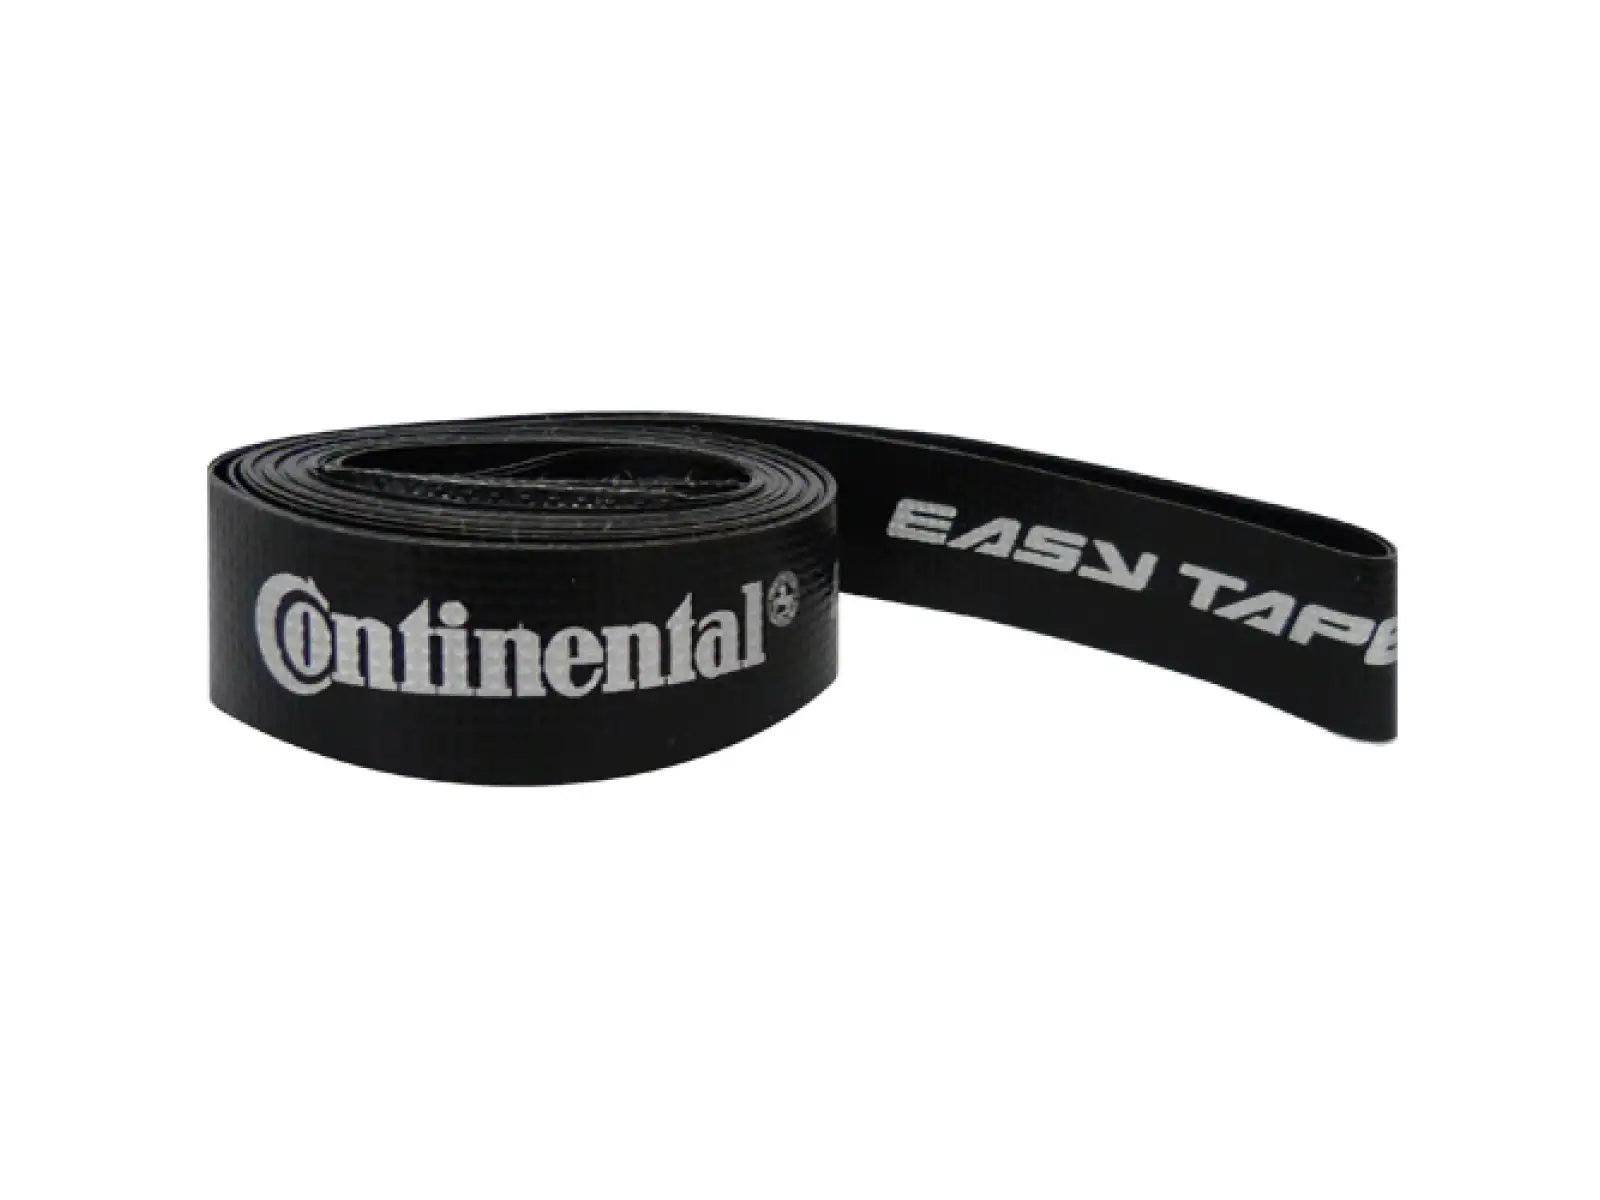 Páska na ráfiky Continental EasyTape 26-622 1 kus